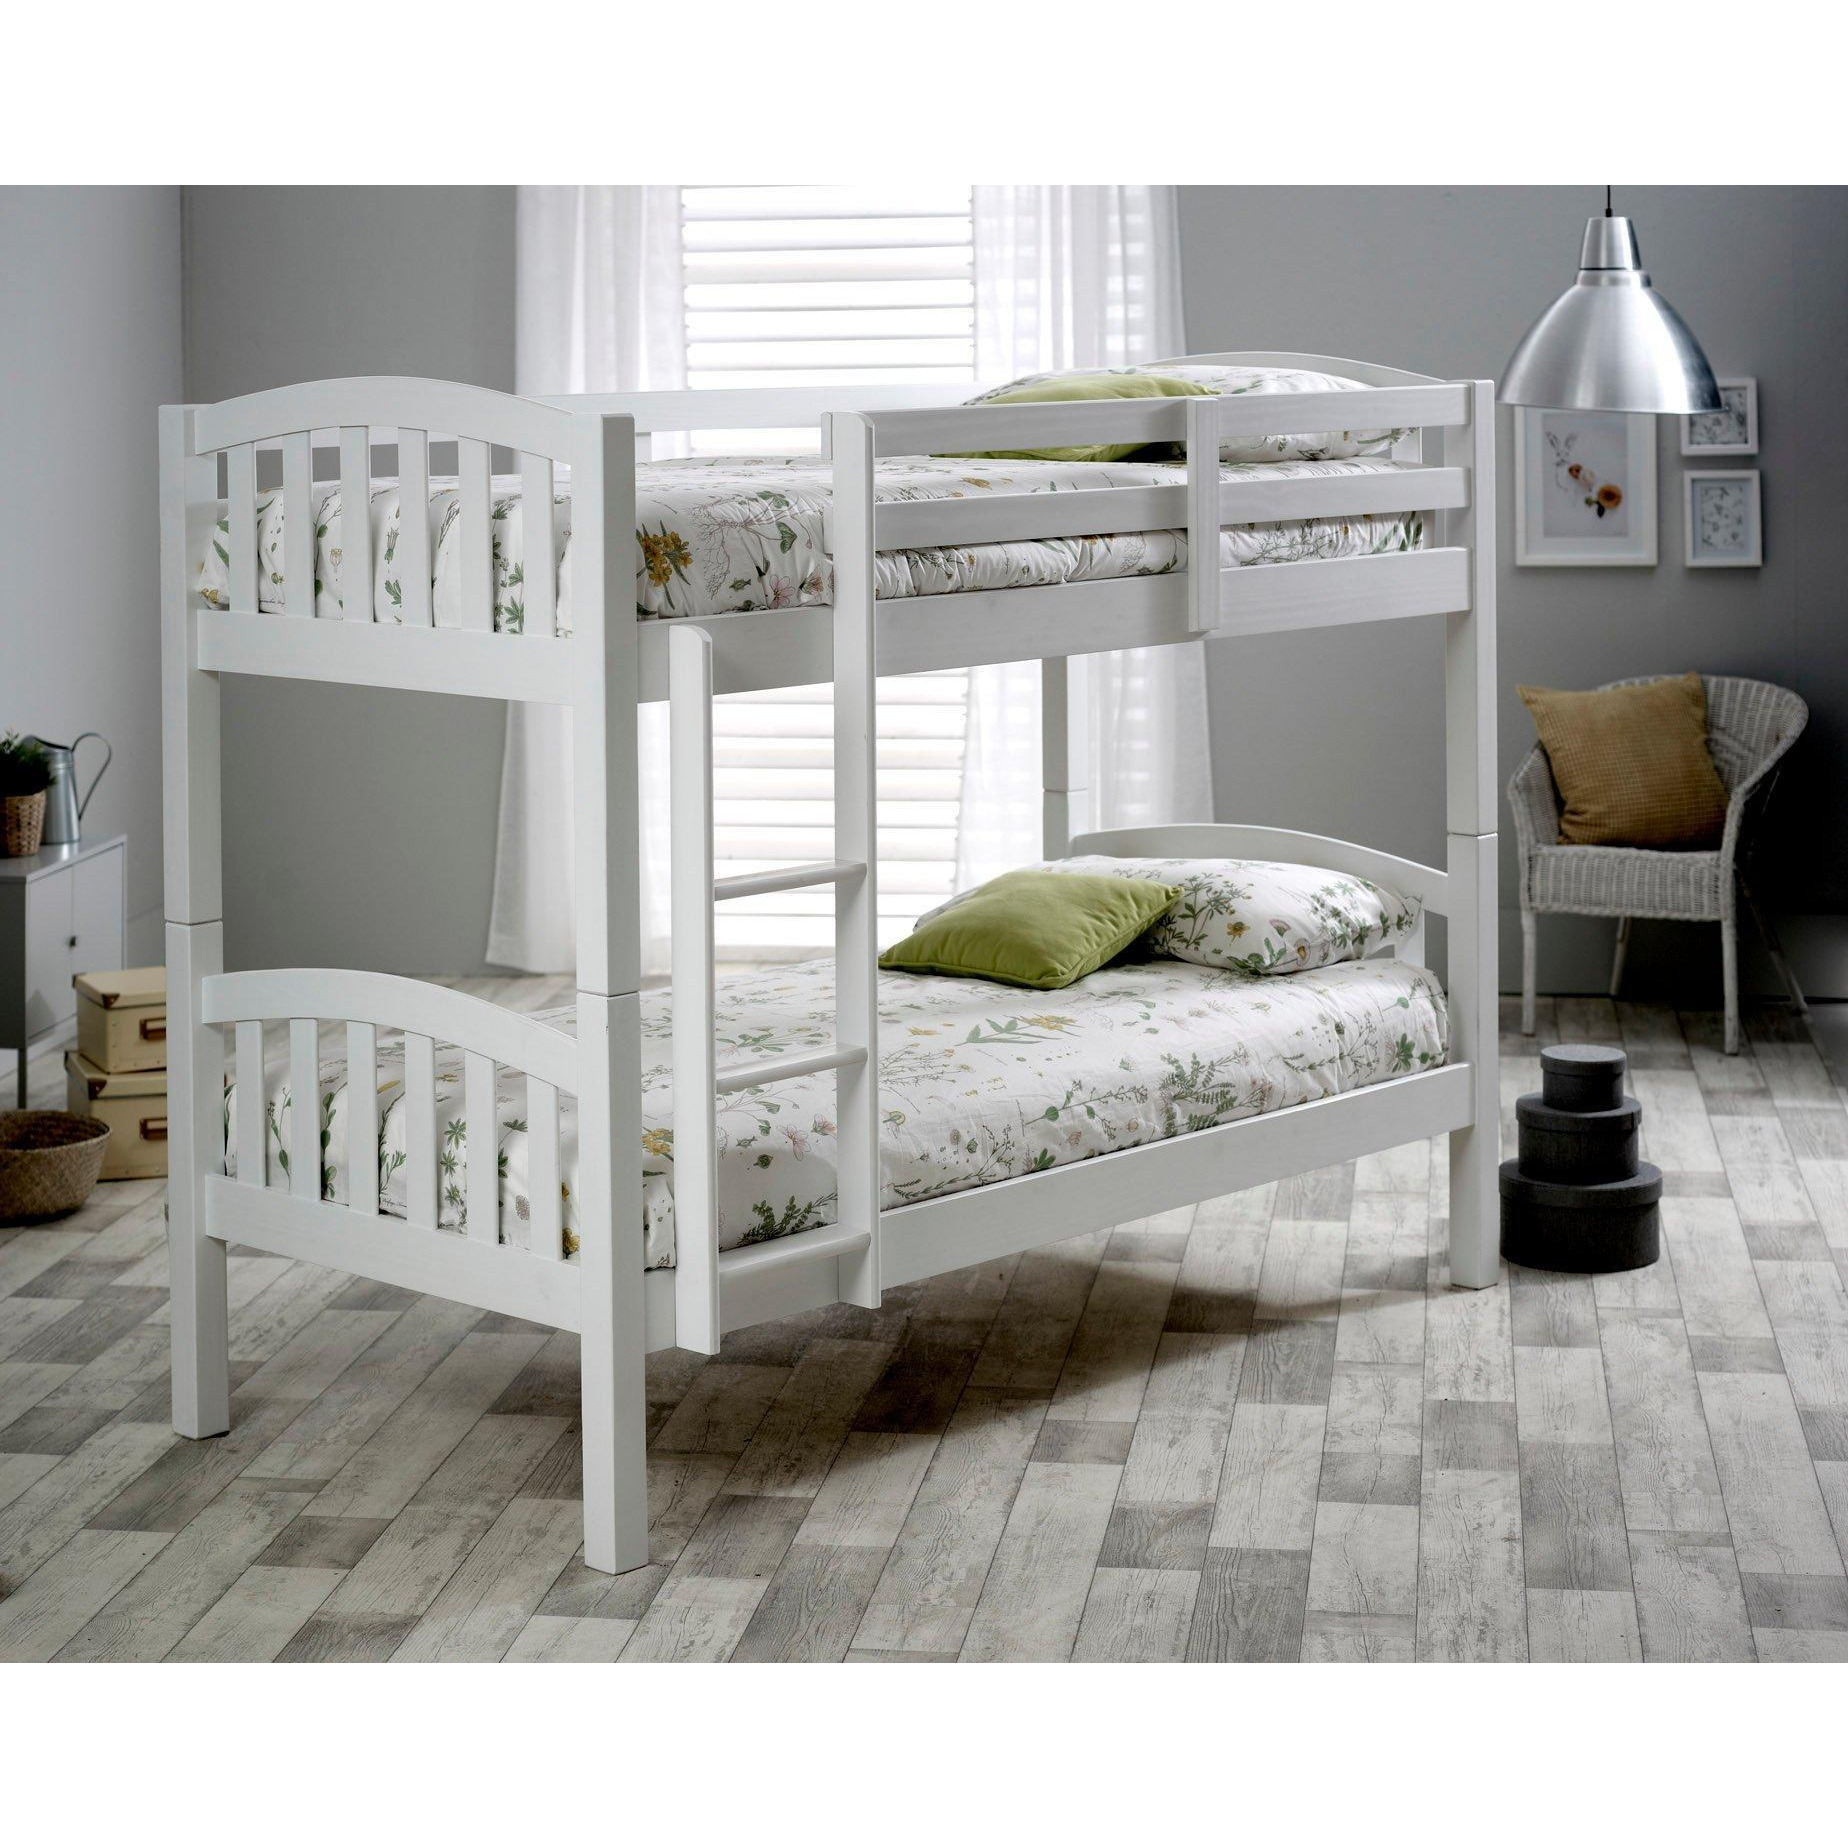 Mya Wooden Single Bunk Bed - image 1